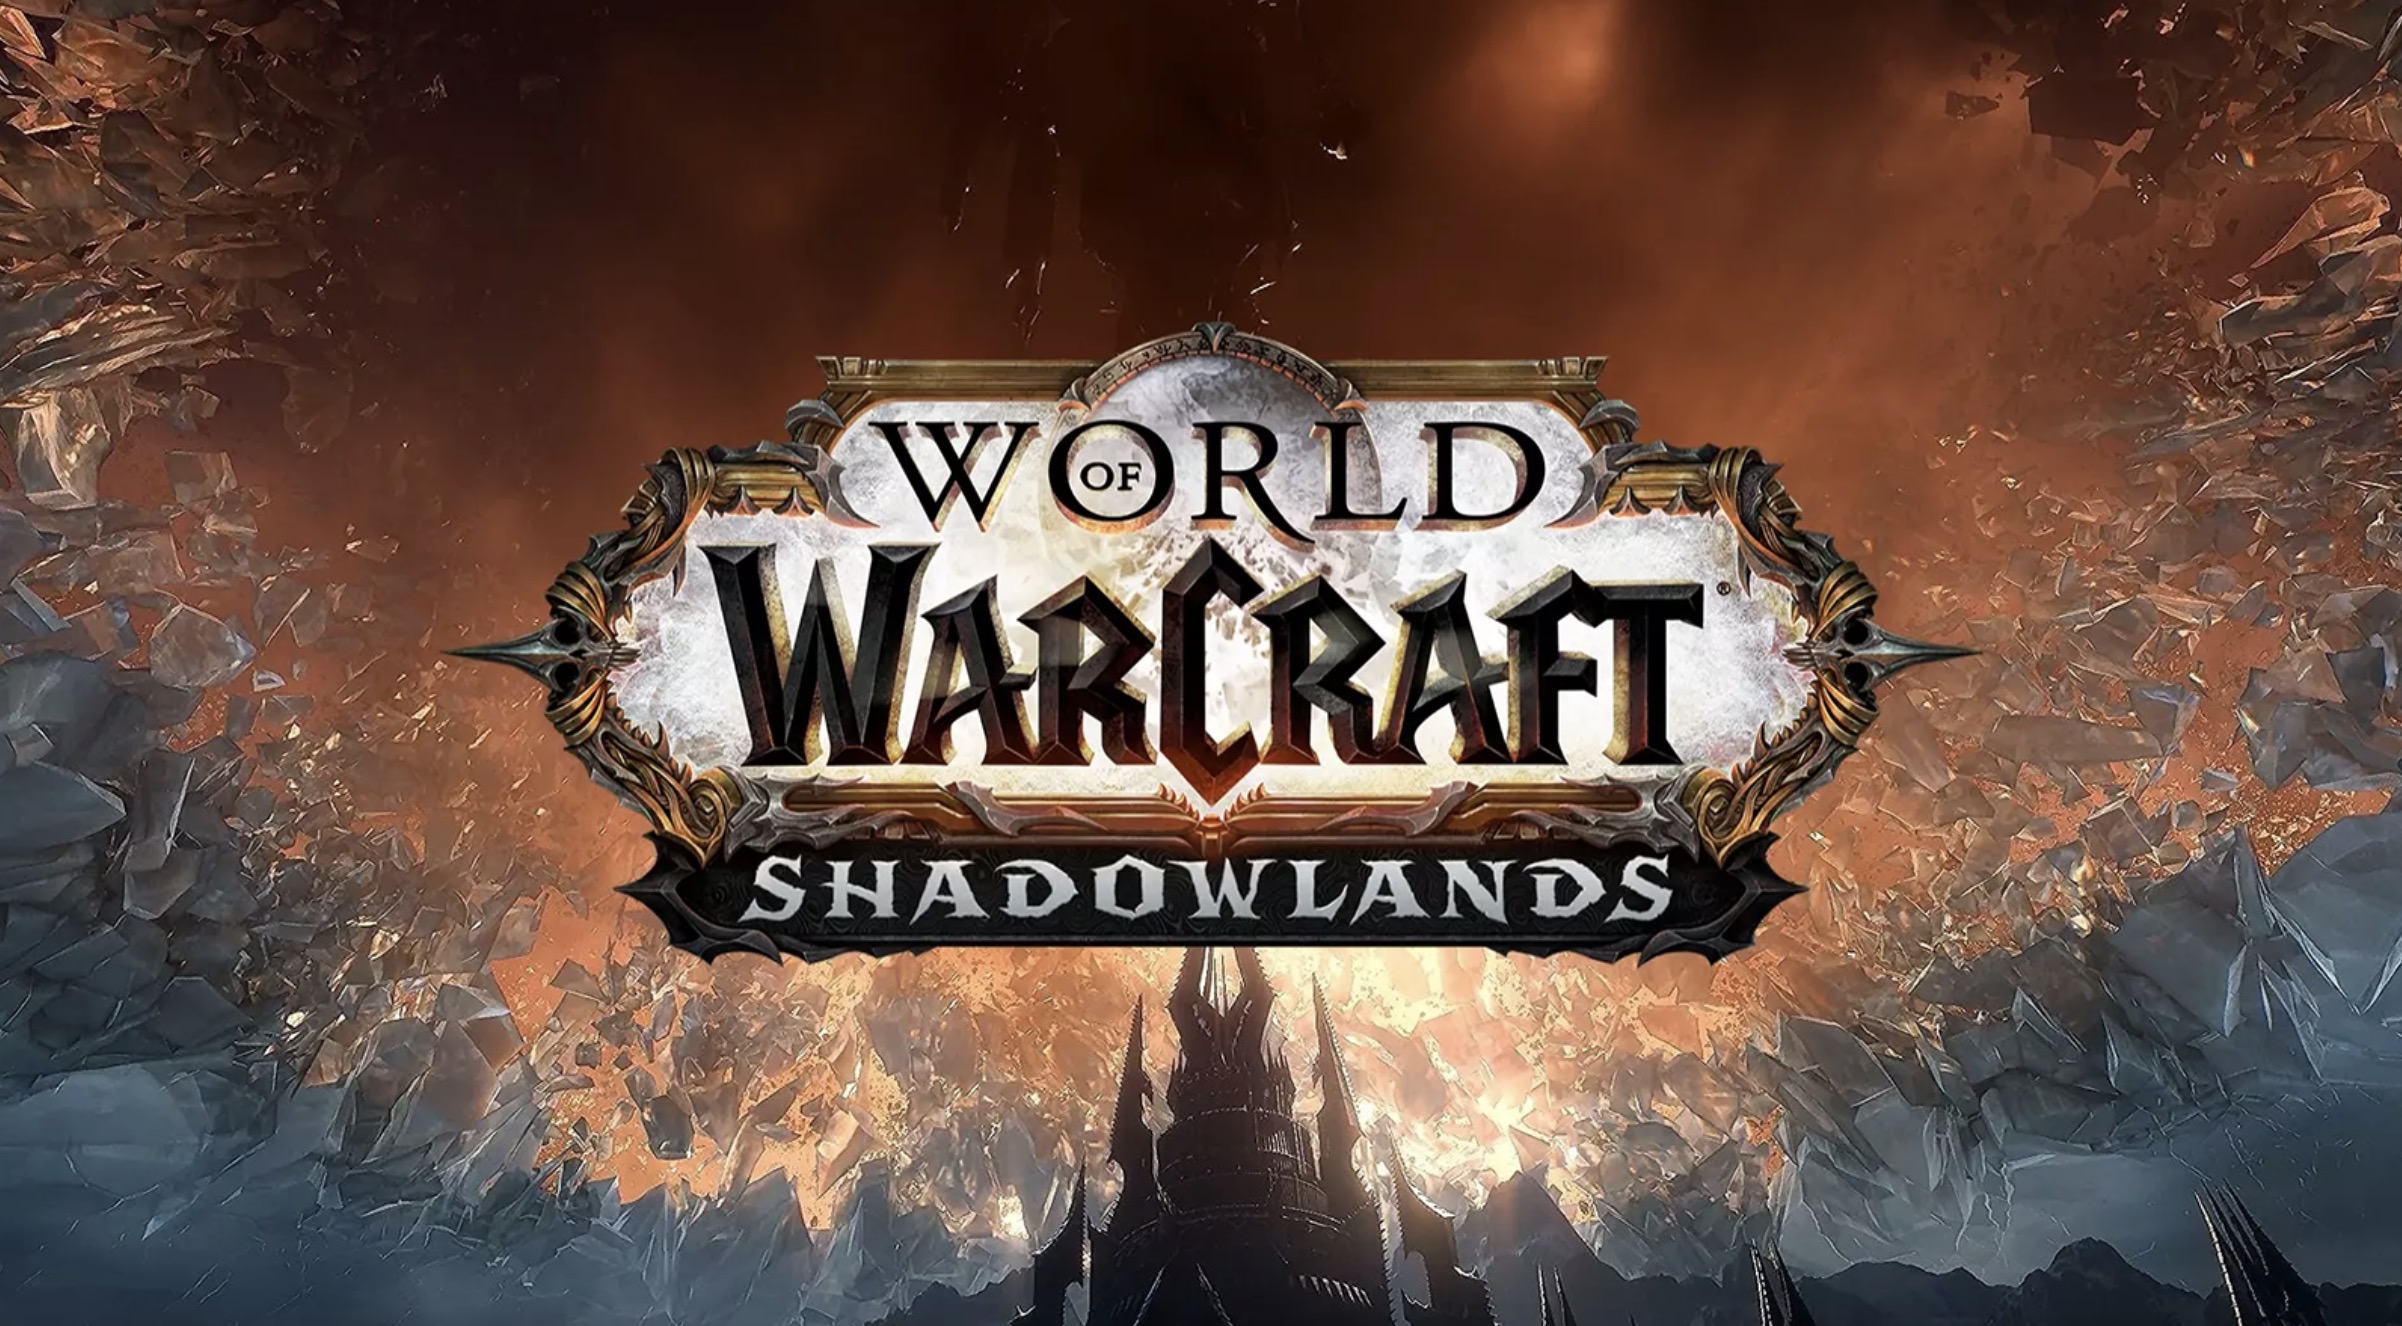 World of Warcraft: Shadowlands CD Key for Battle.net: Europe